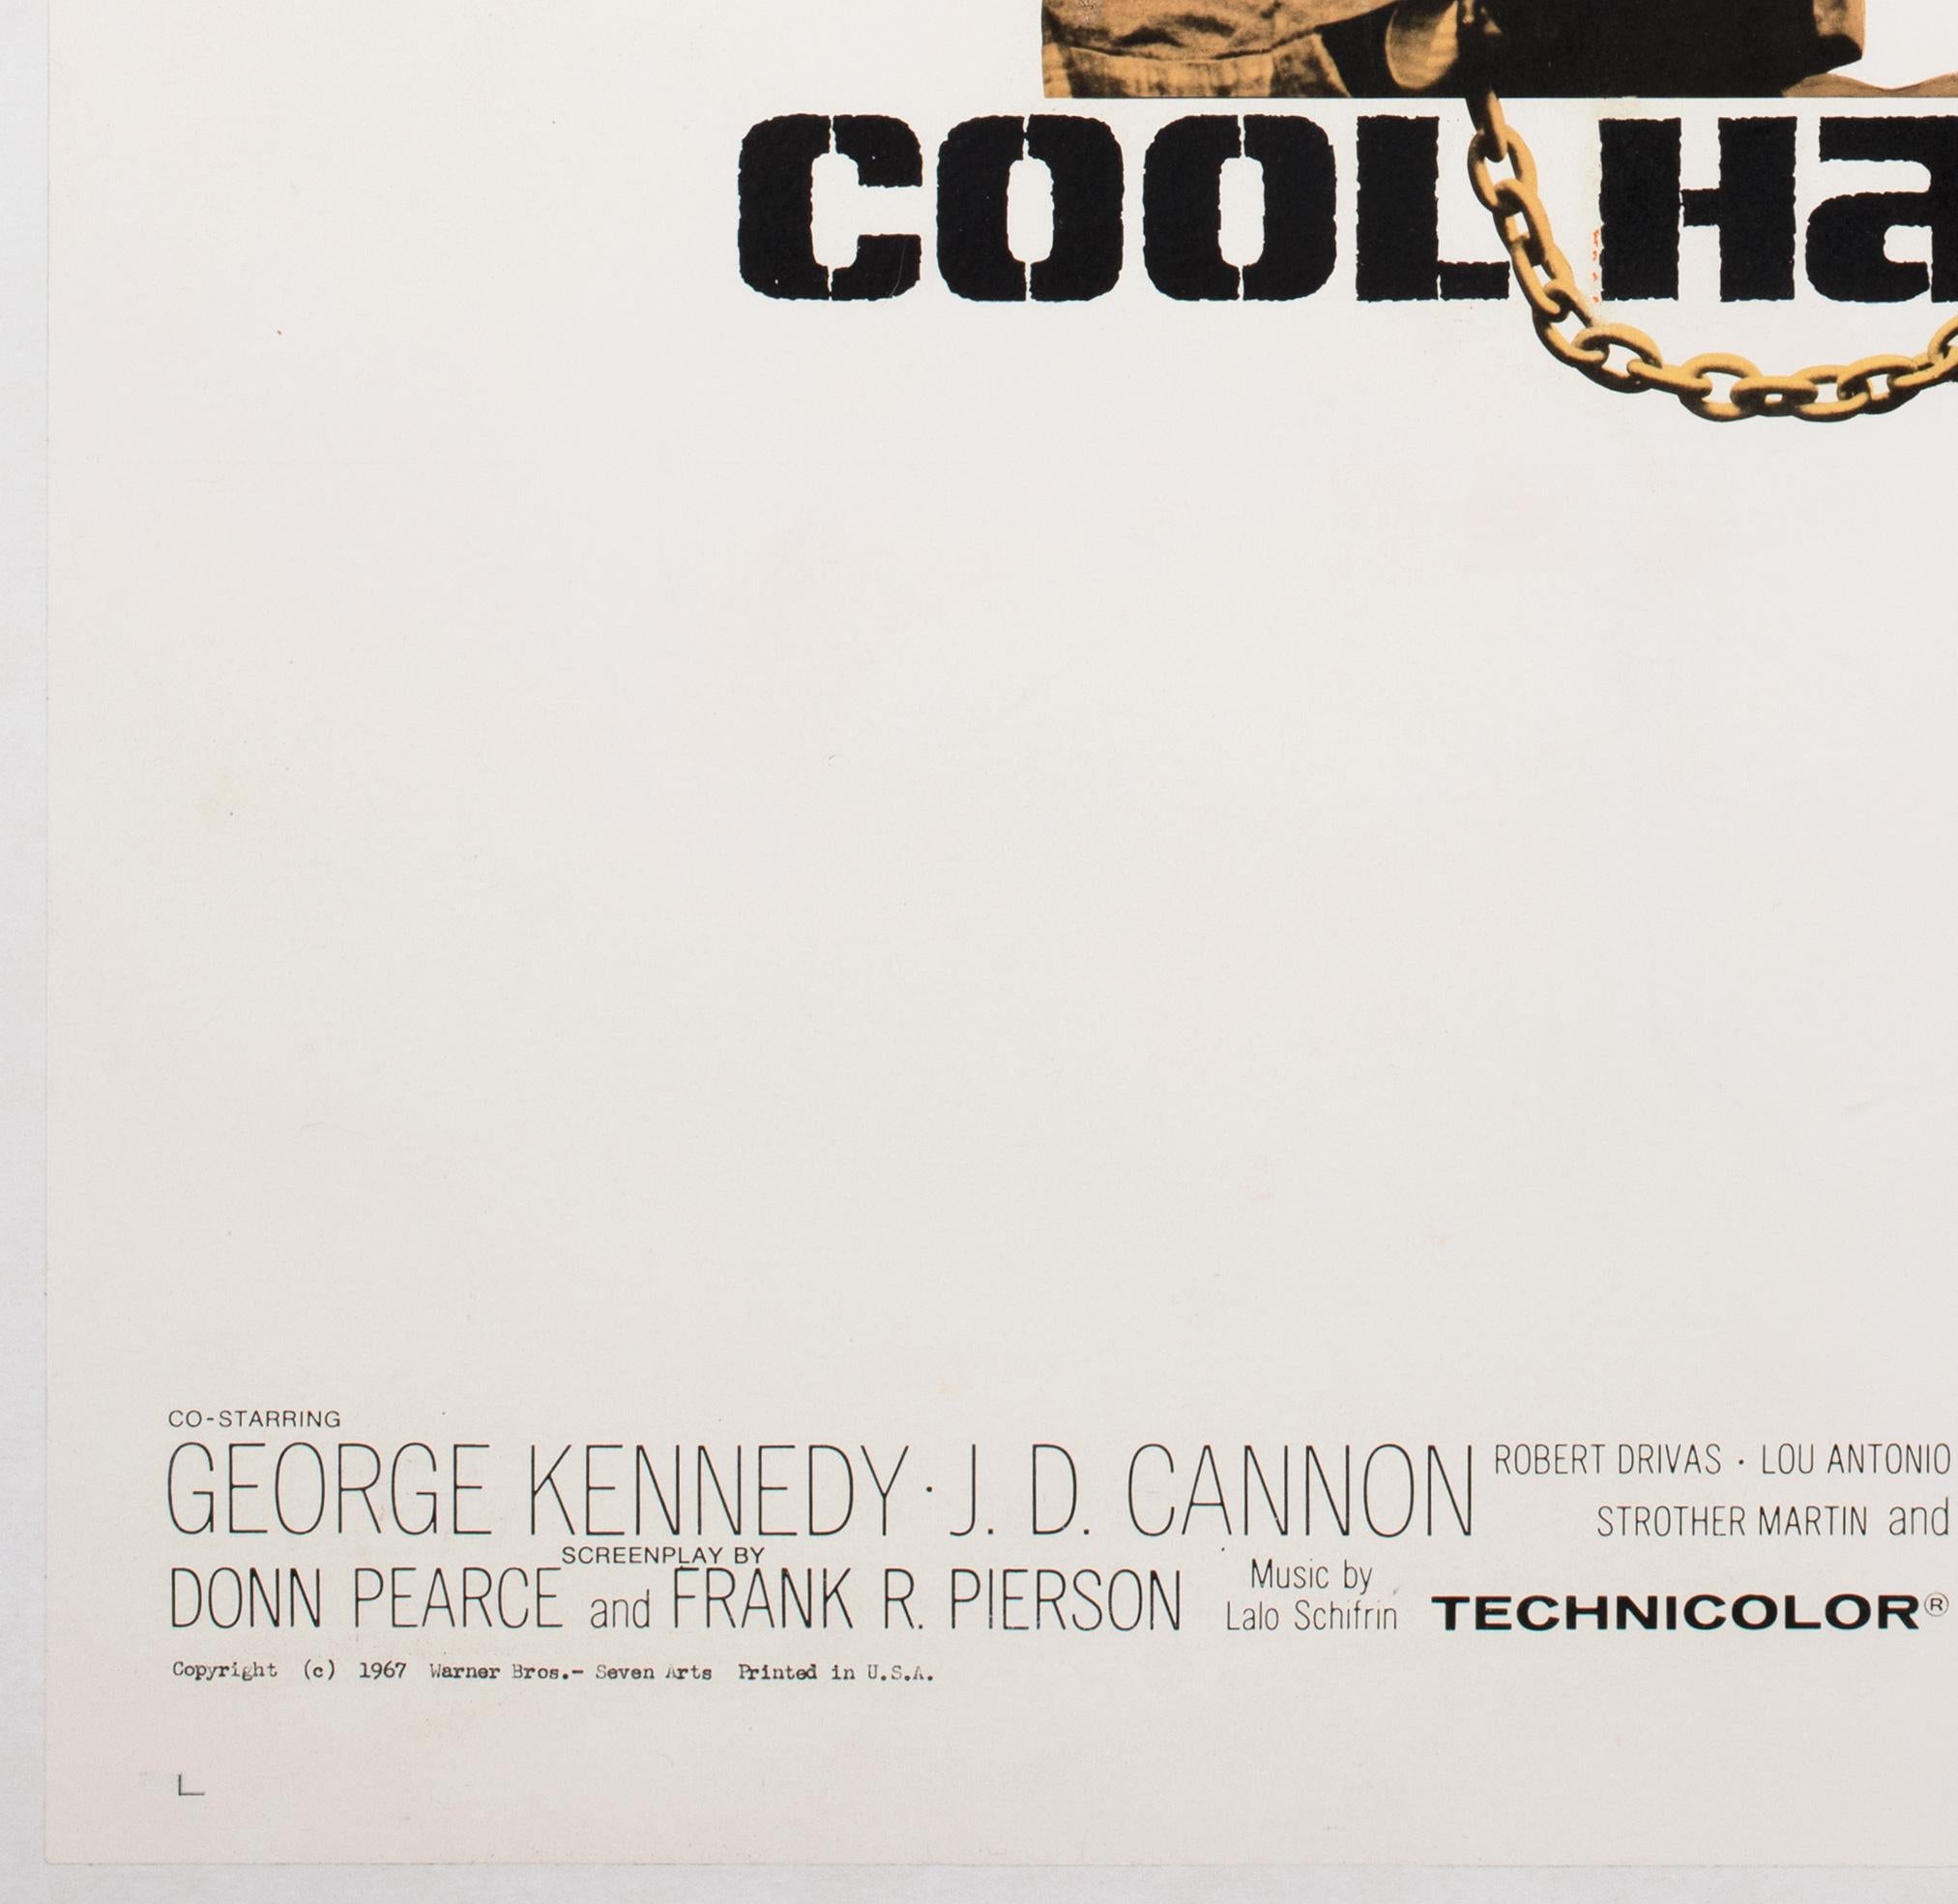 Cool Hand Luke 1967 US 1 Sheet Film Poster 1